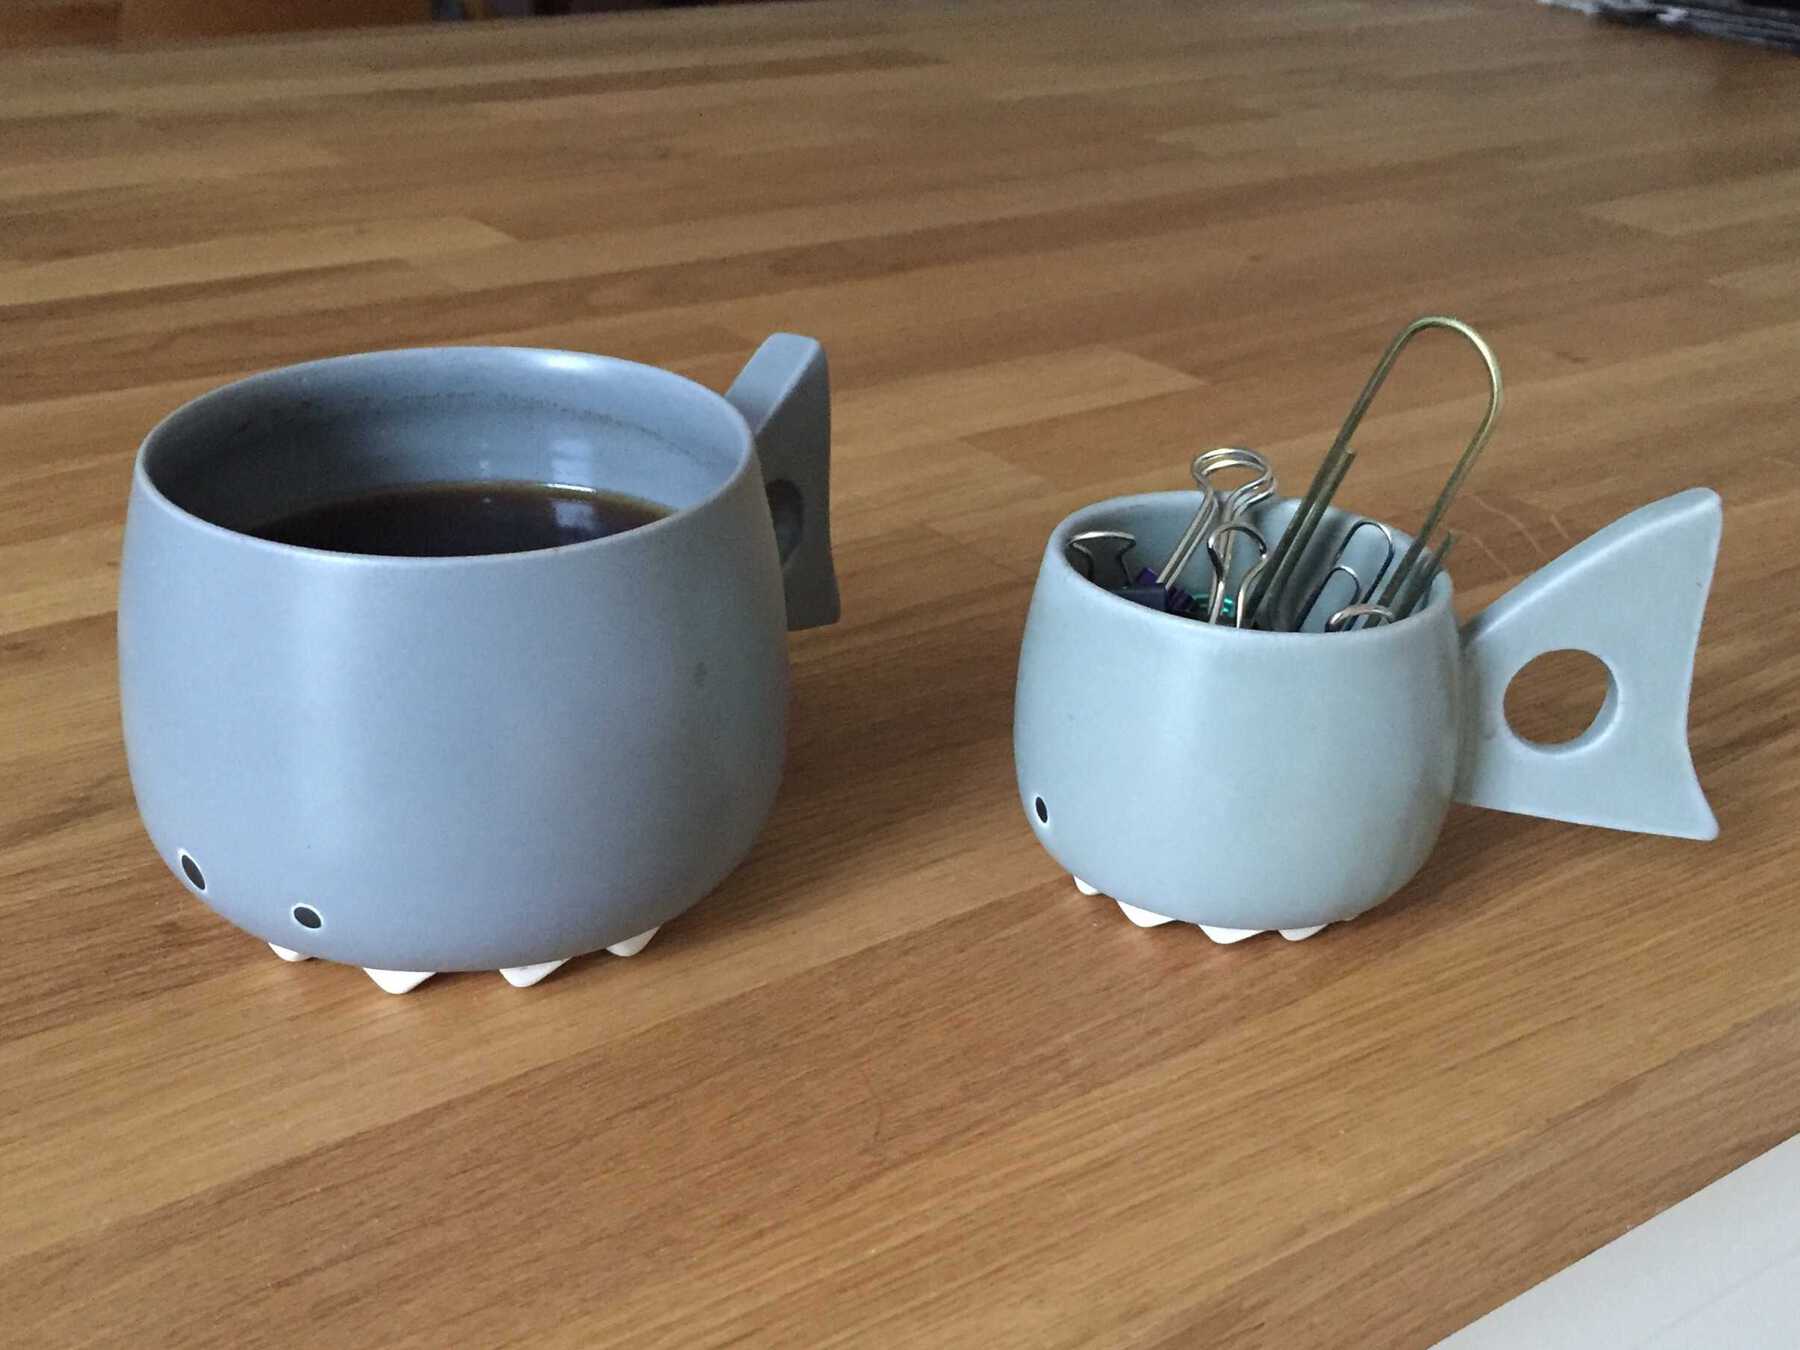 Shark-shaped coffee mug and matching paper-clip holder